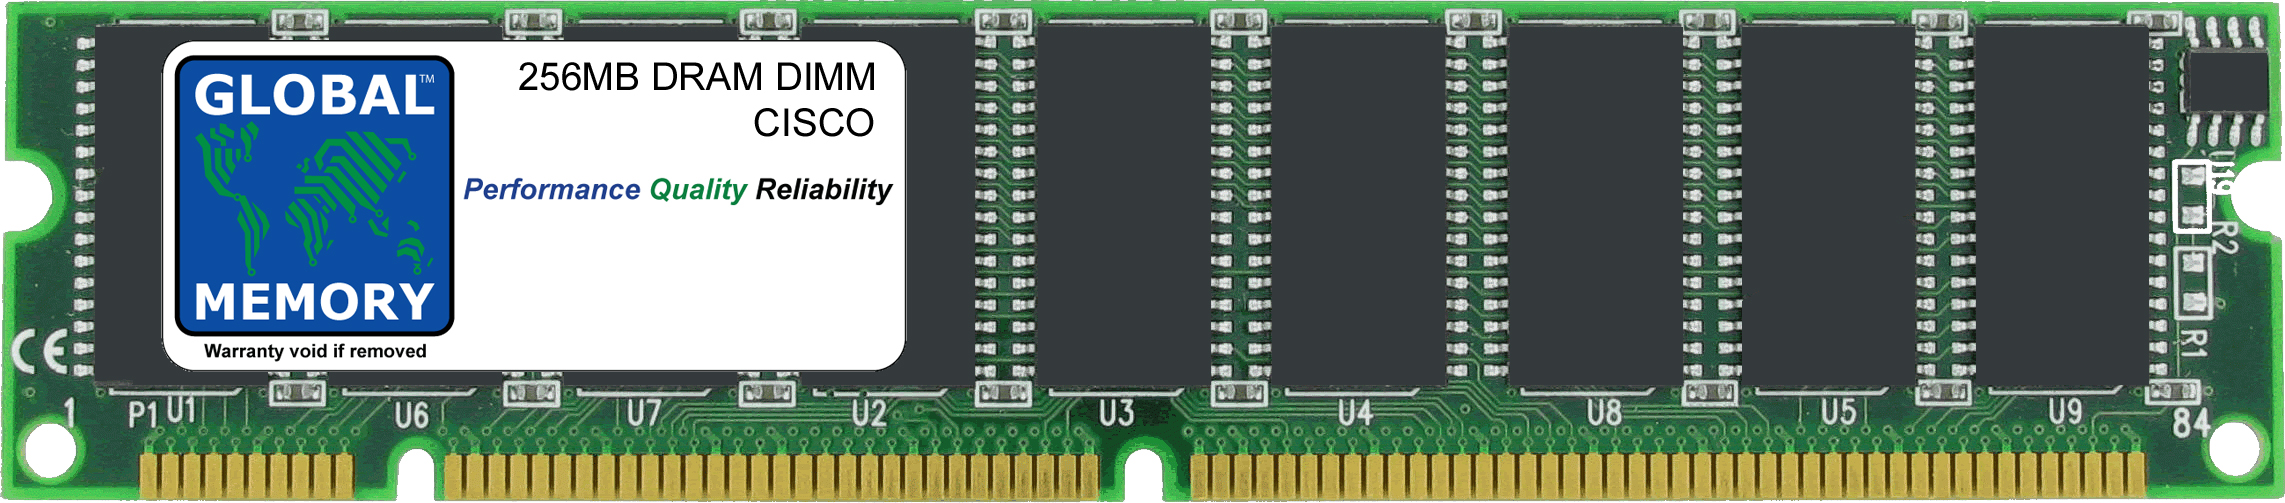 256MB DRAM DIMM MEMORY RAM FOR CISCO 7400 ASR / 7400 VPN ROUTERS (MEM-7400ASR-256MB)